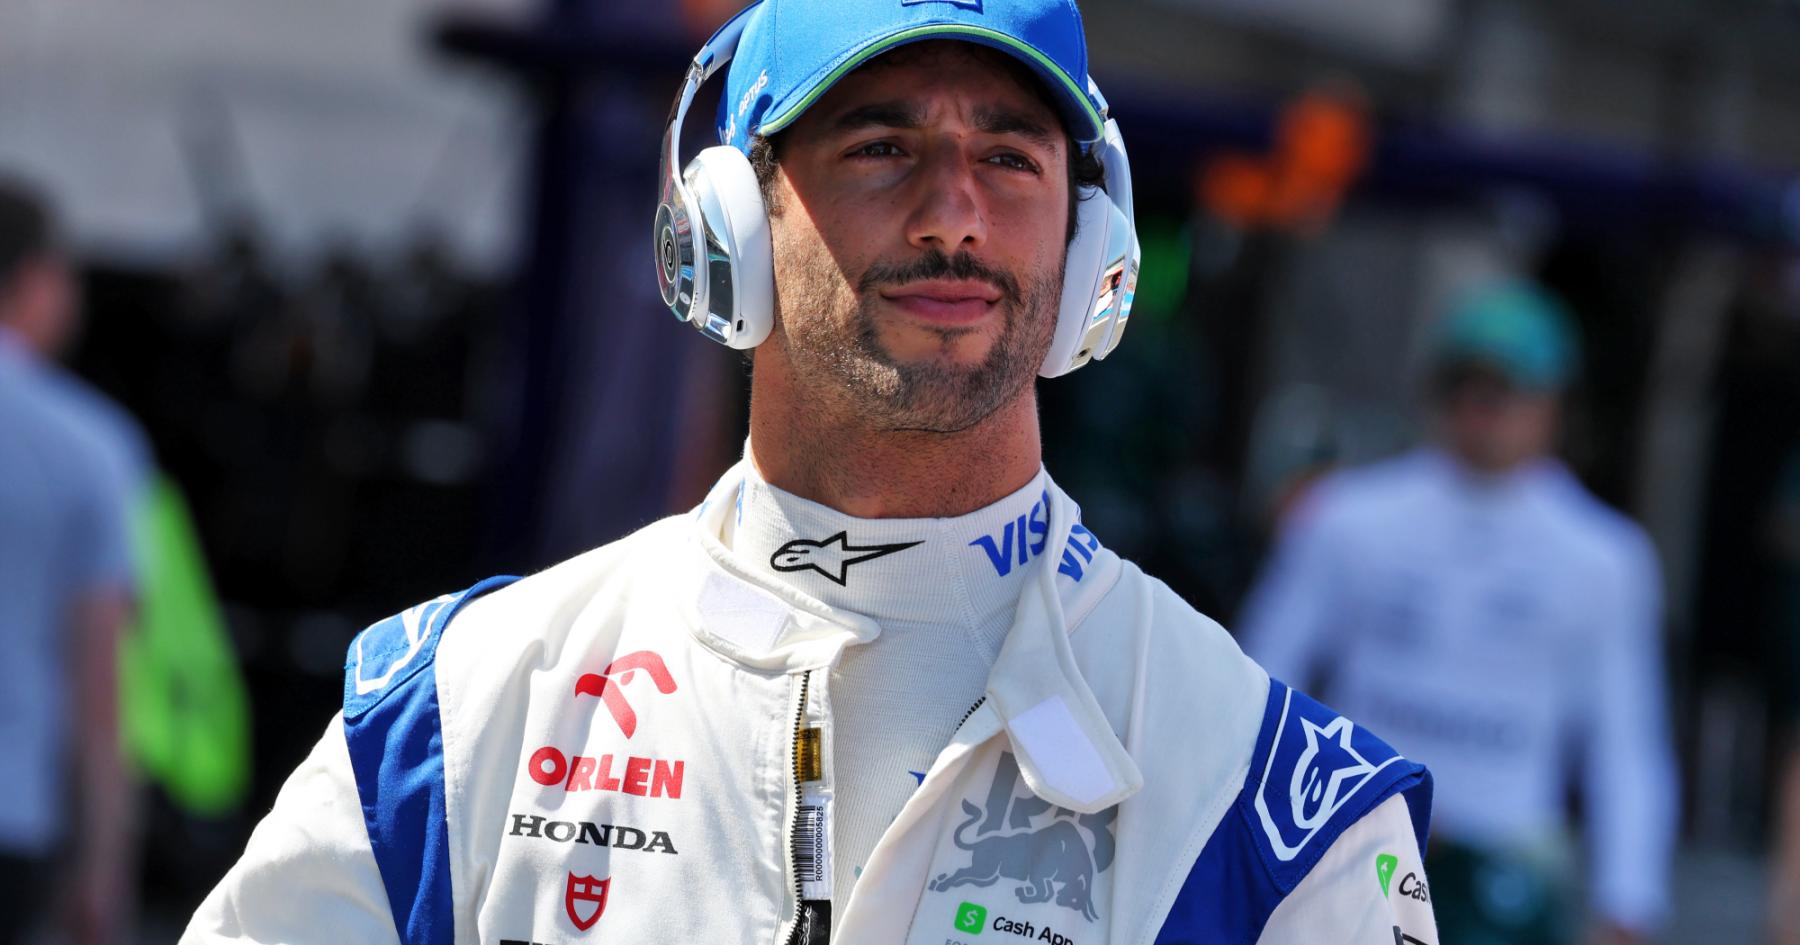 Ricciardo Shuts Down Rumors, but F1 Future Faces Dire Warning